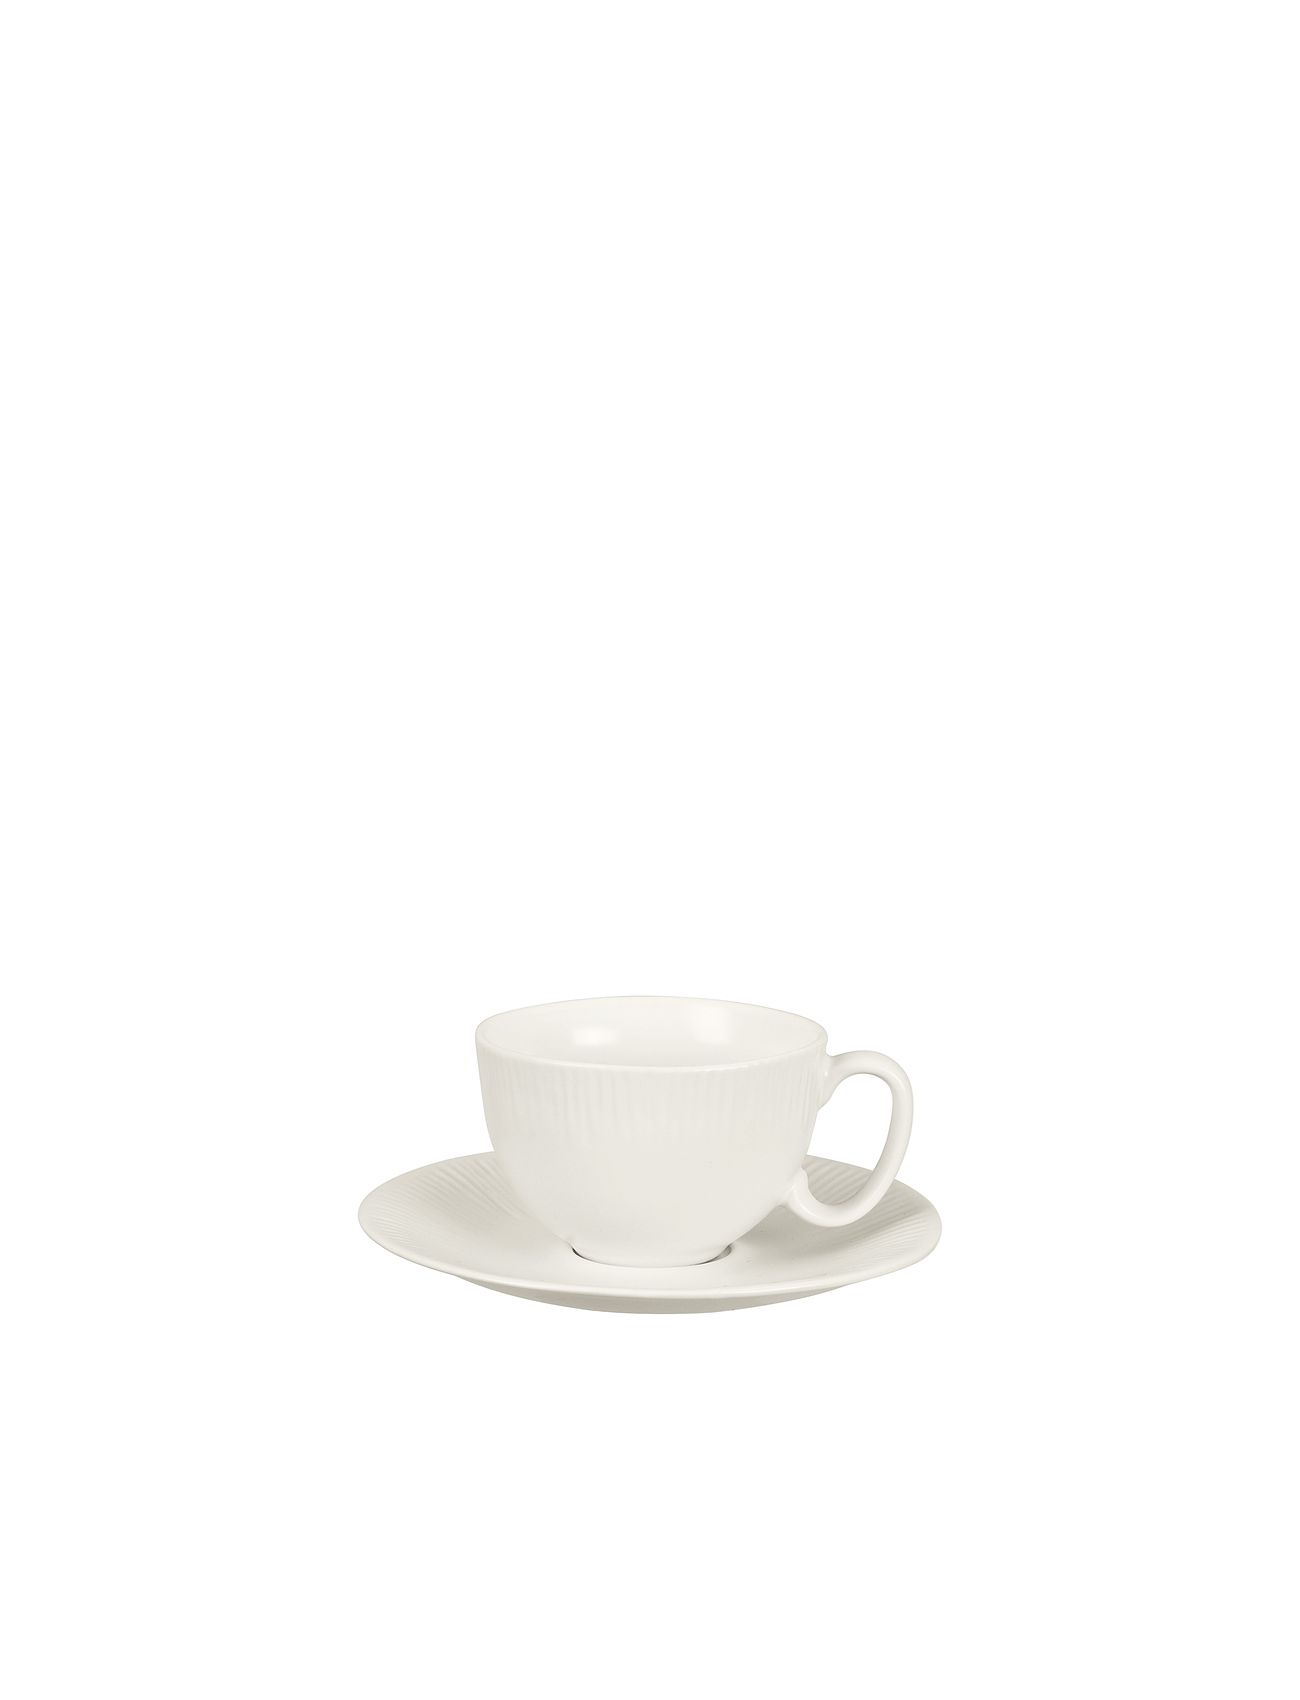 Sandvig Cup Home Tableware Cups & Mugs Tea Cups White Broste Copenhagen